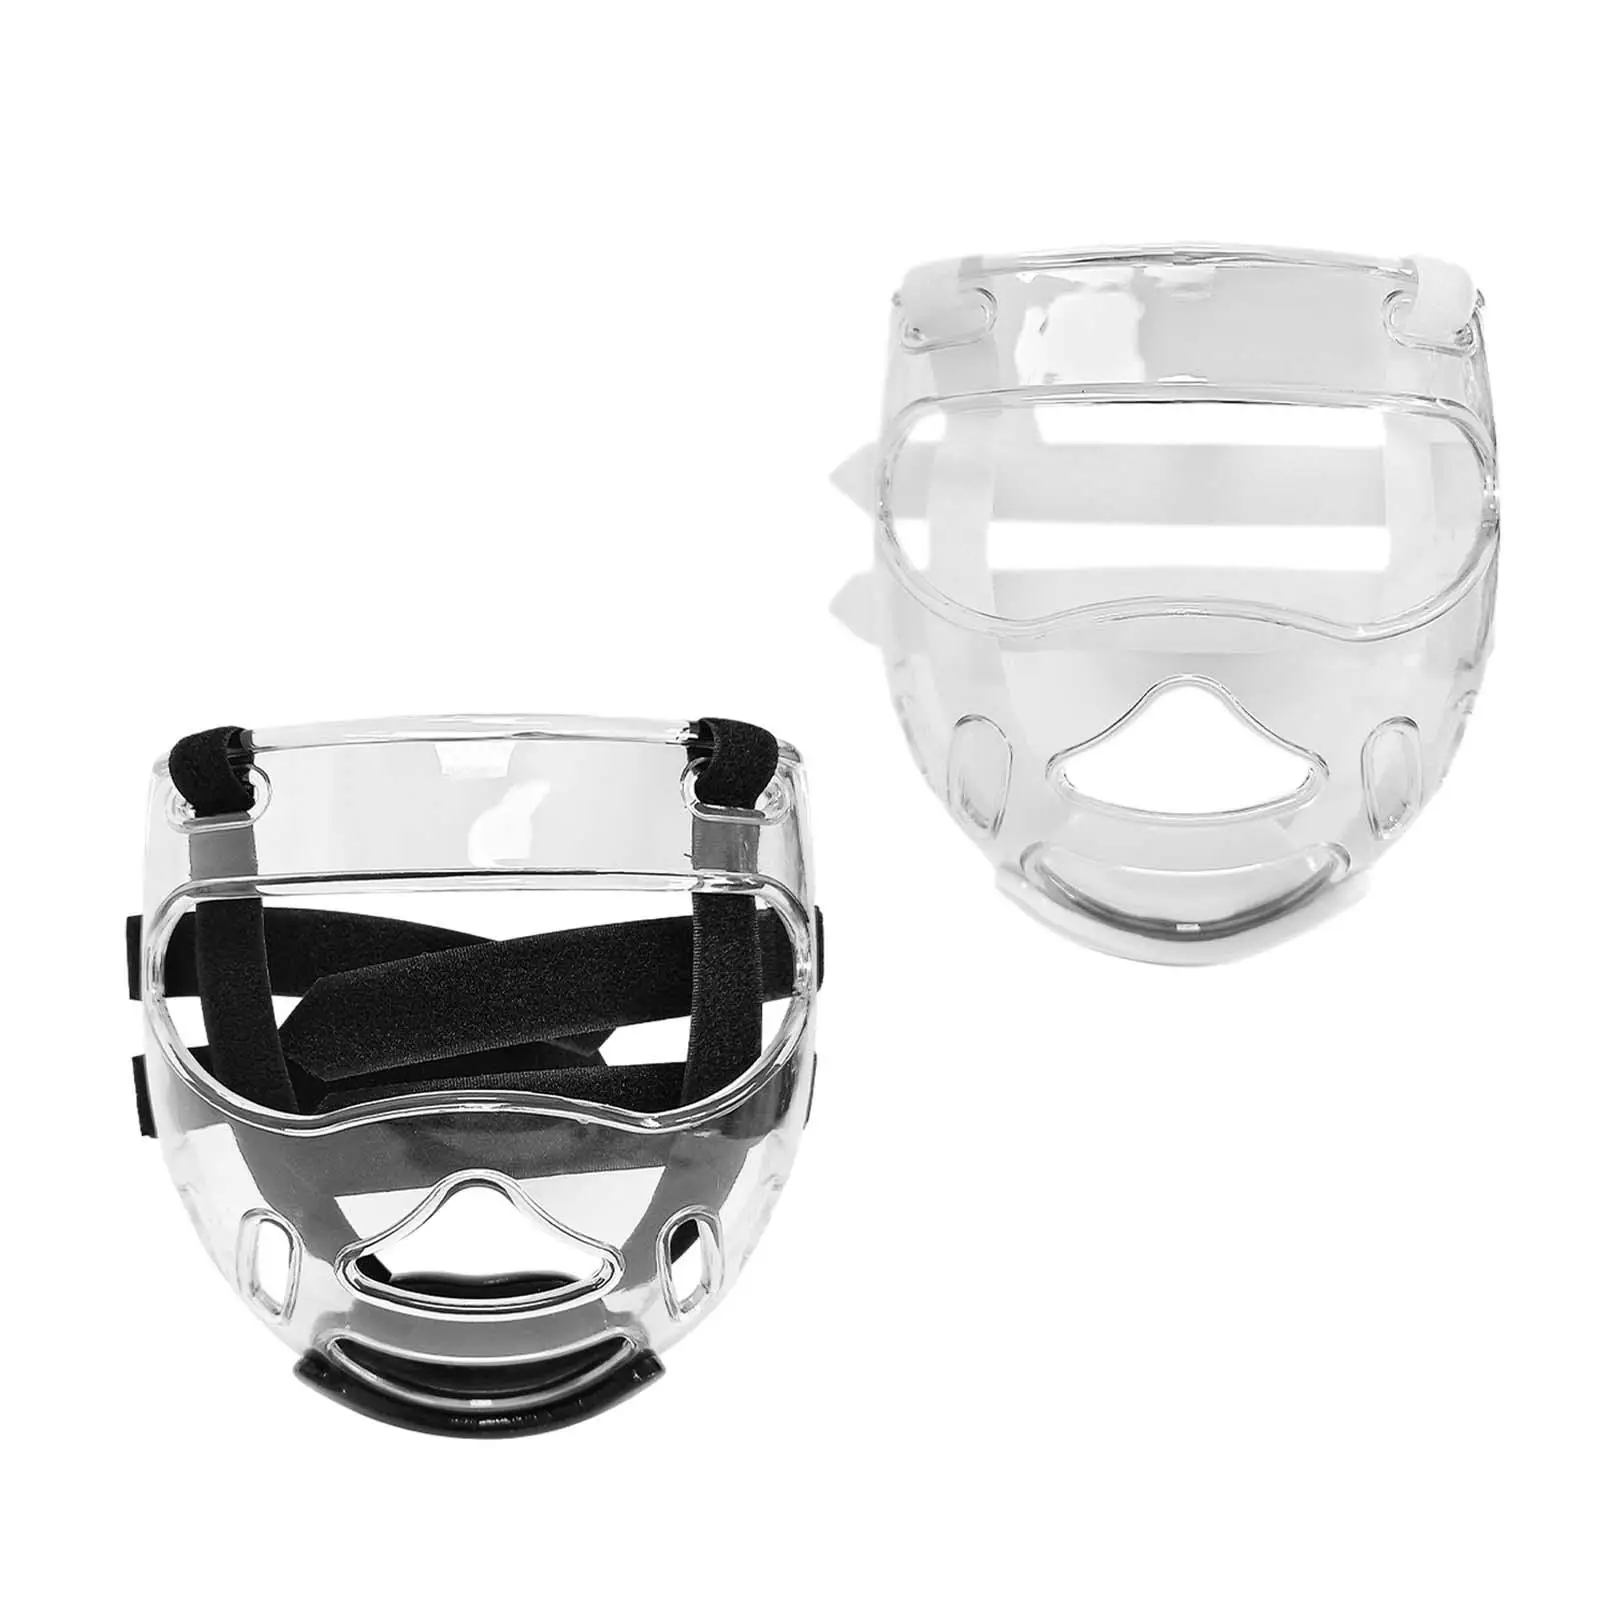 Taekwondo Face Mask Taekwondo Face Shield Protective Gear Face Guard for Martial Arts Wrestling Sparring Kickboxing Grappling